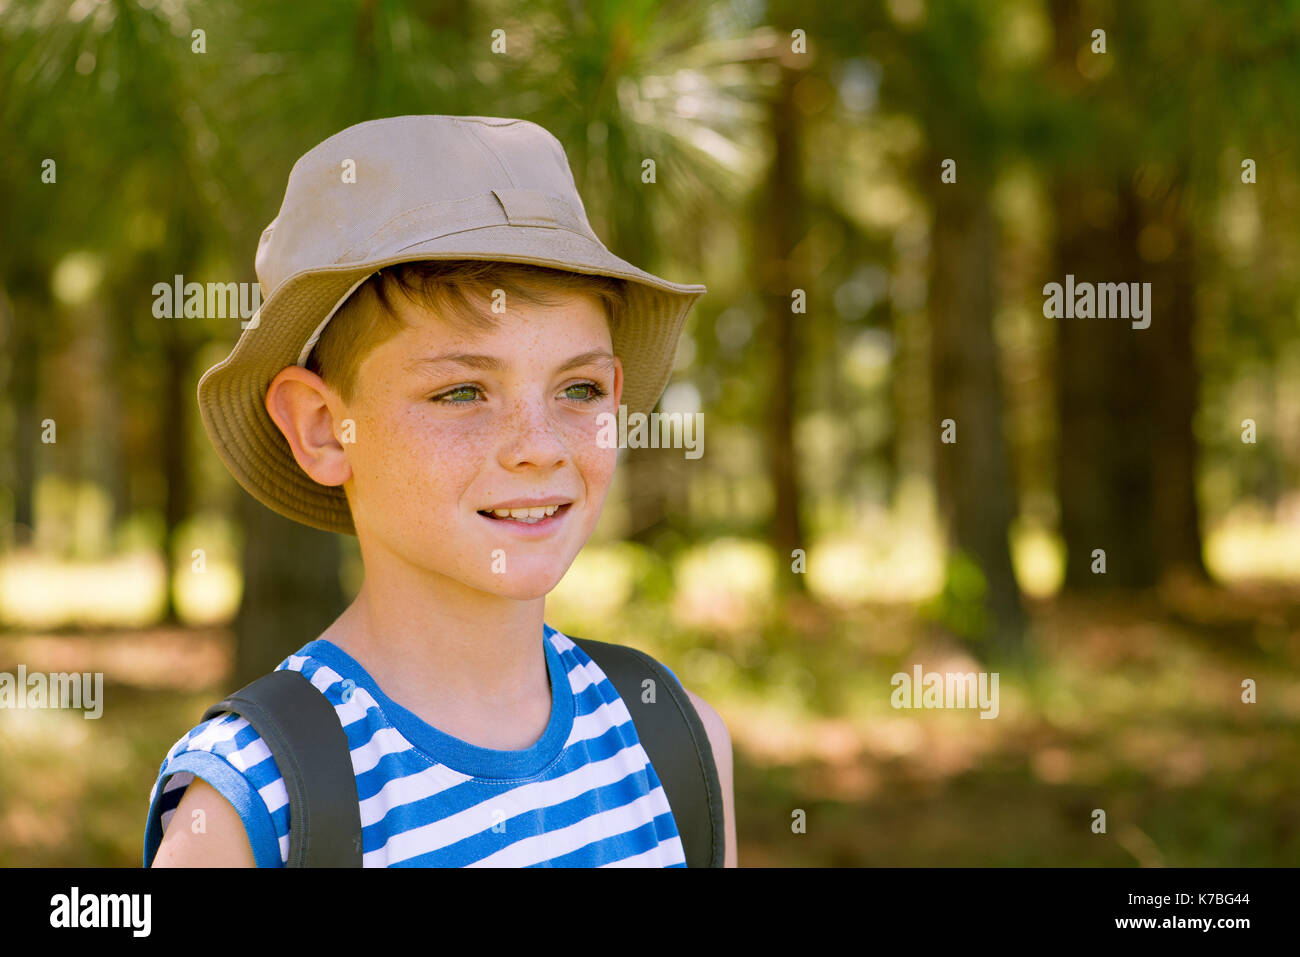 Boy hiking in woods, portrait Stock Photo